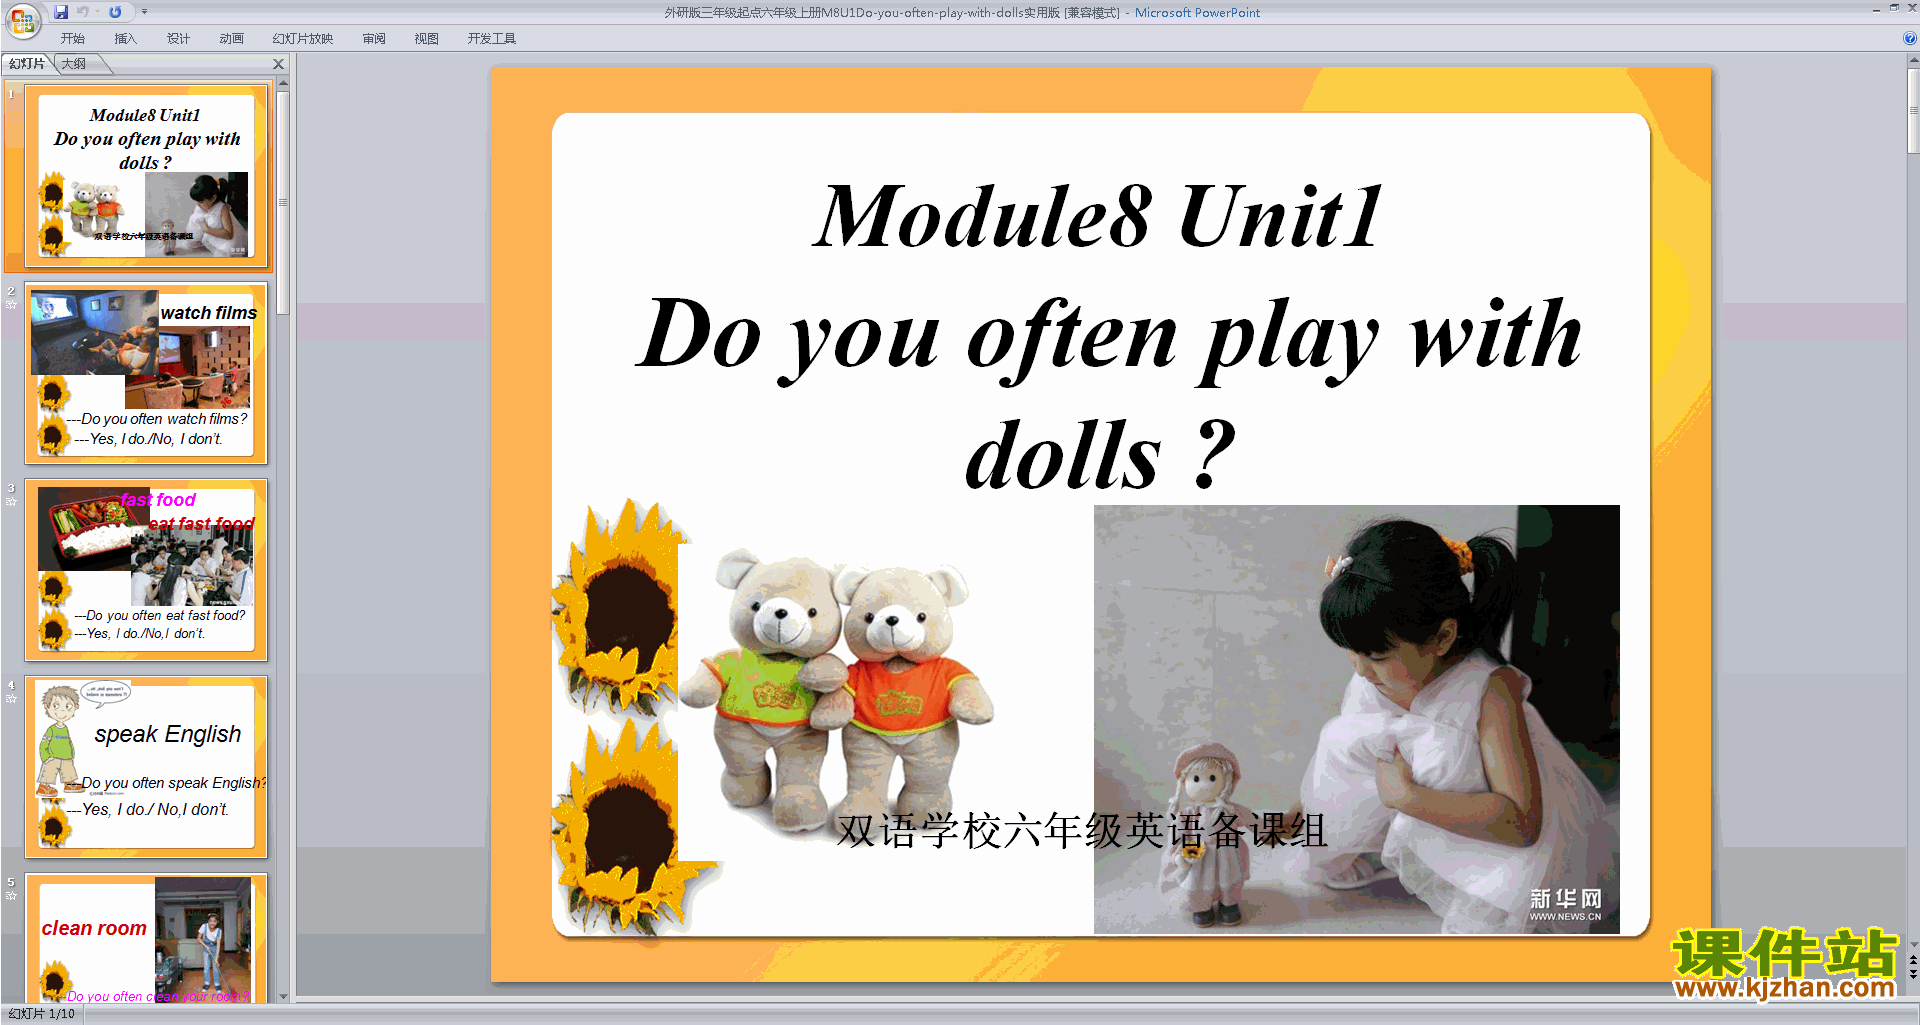 Module8 Unit1 Do you often play with dollspptμ14